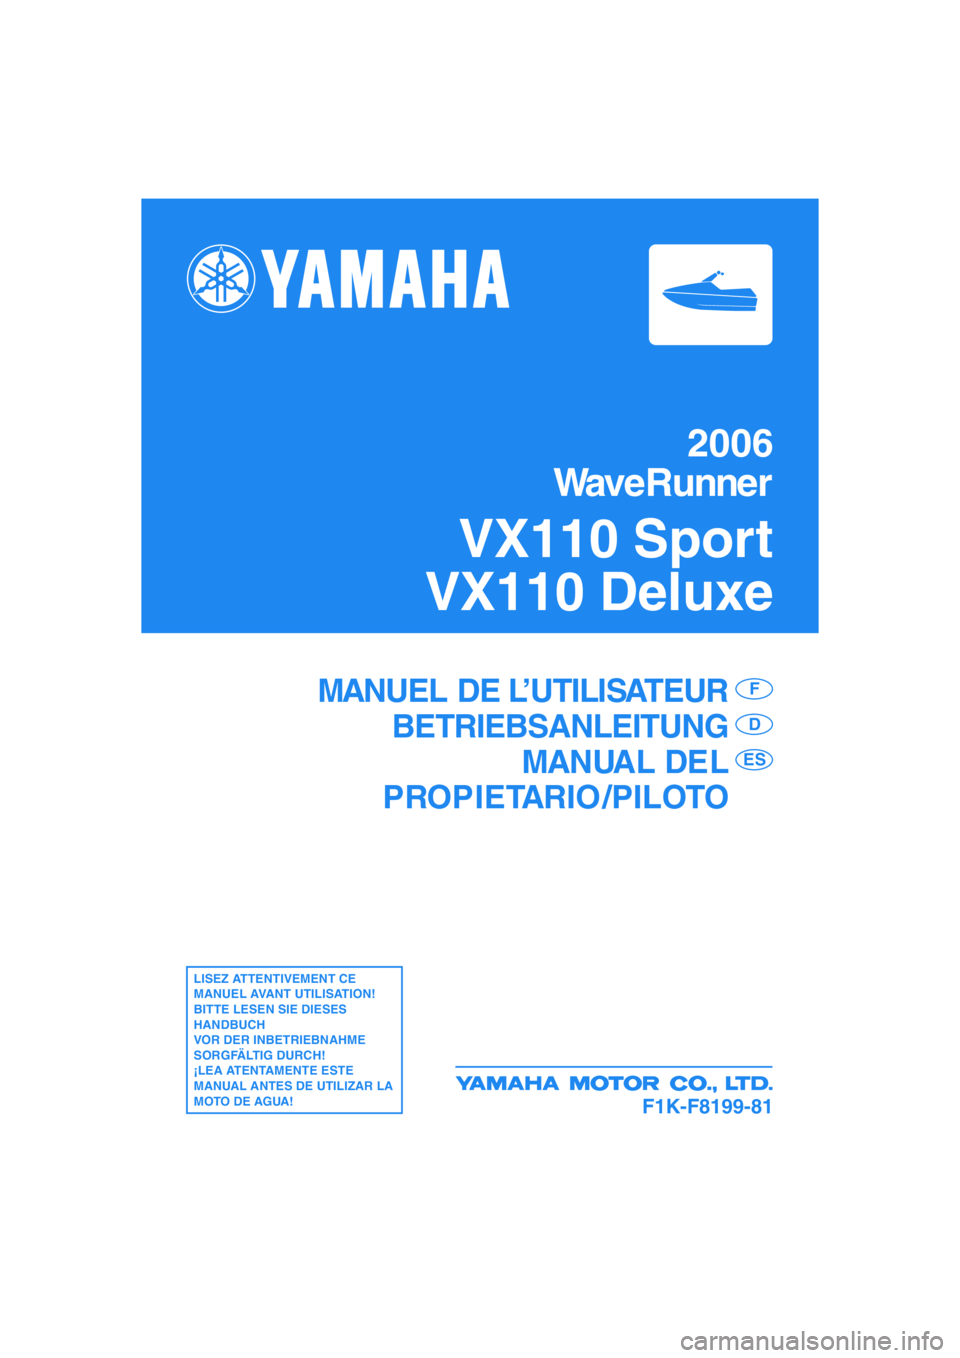 YAMAHA VX 2006  Manuale de Empleo (in Spanish) 